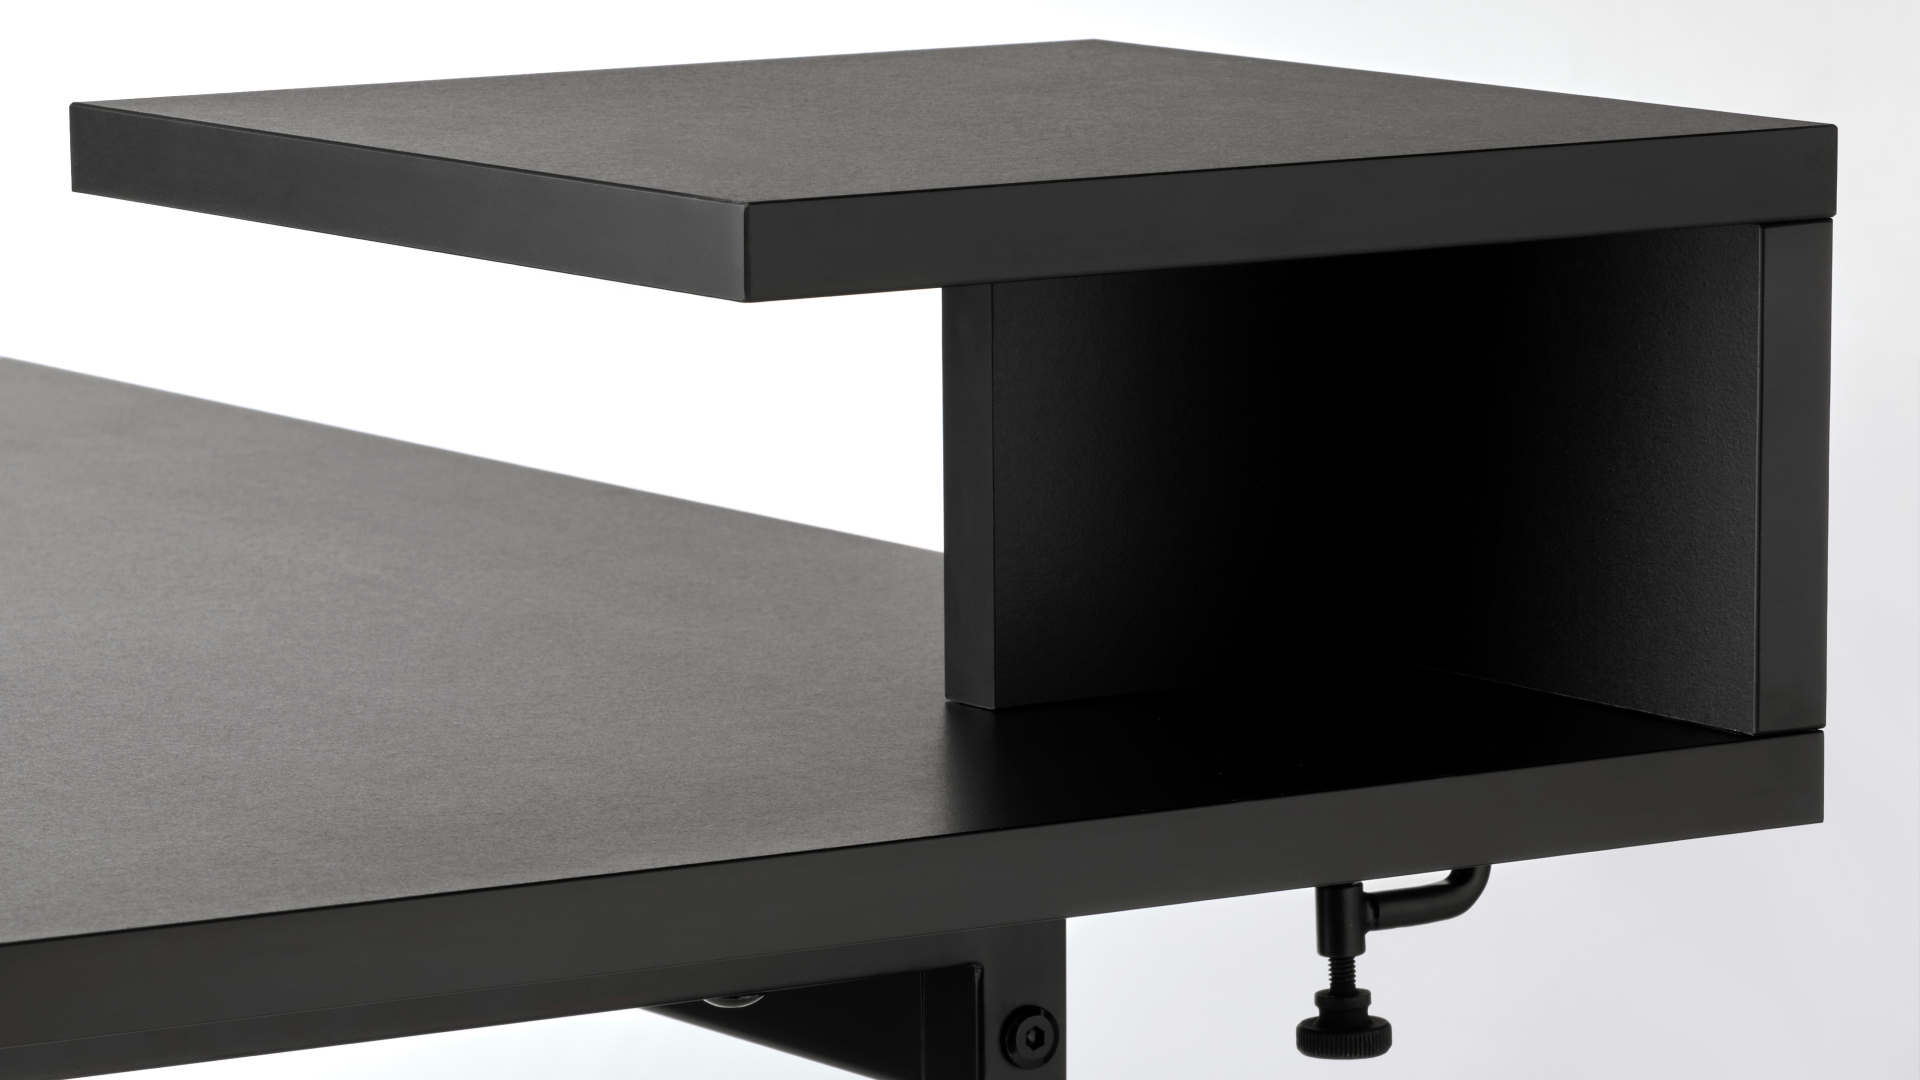 Ikea Obegransad desk detail in black on white background